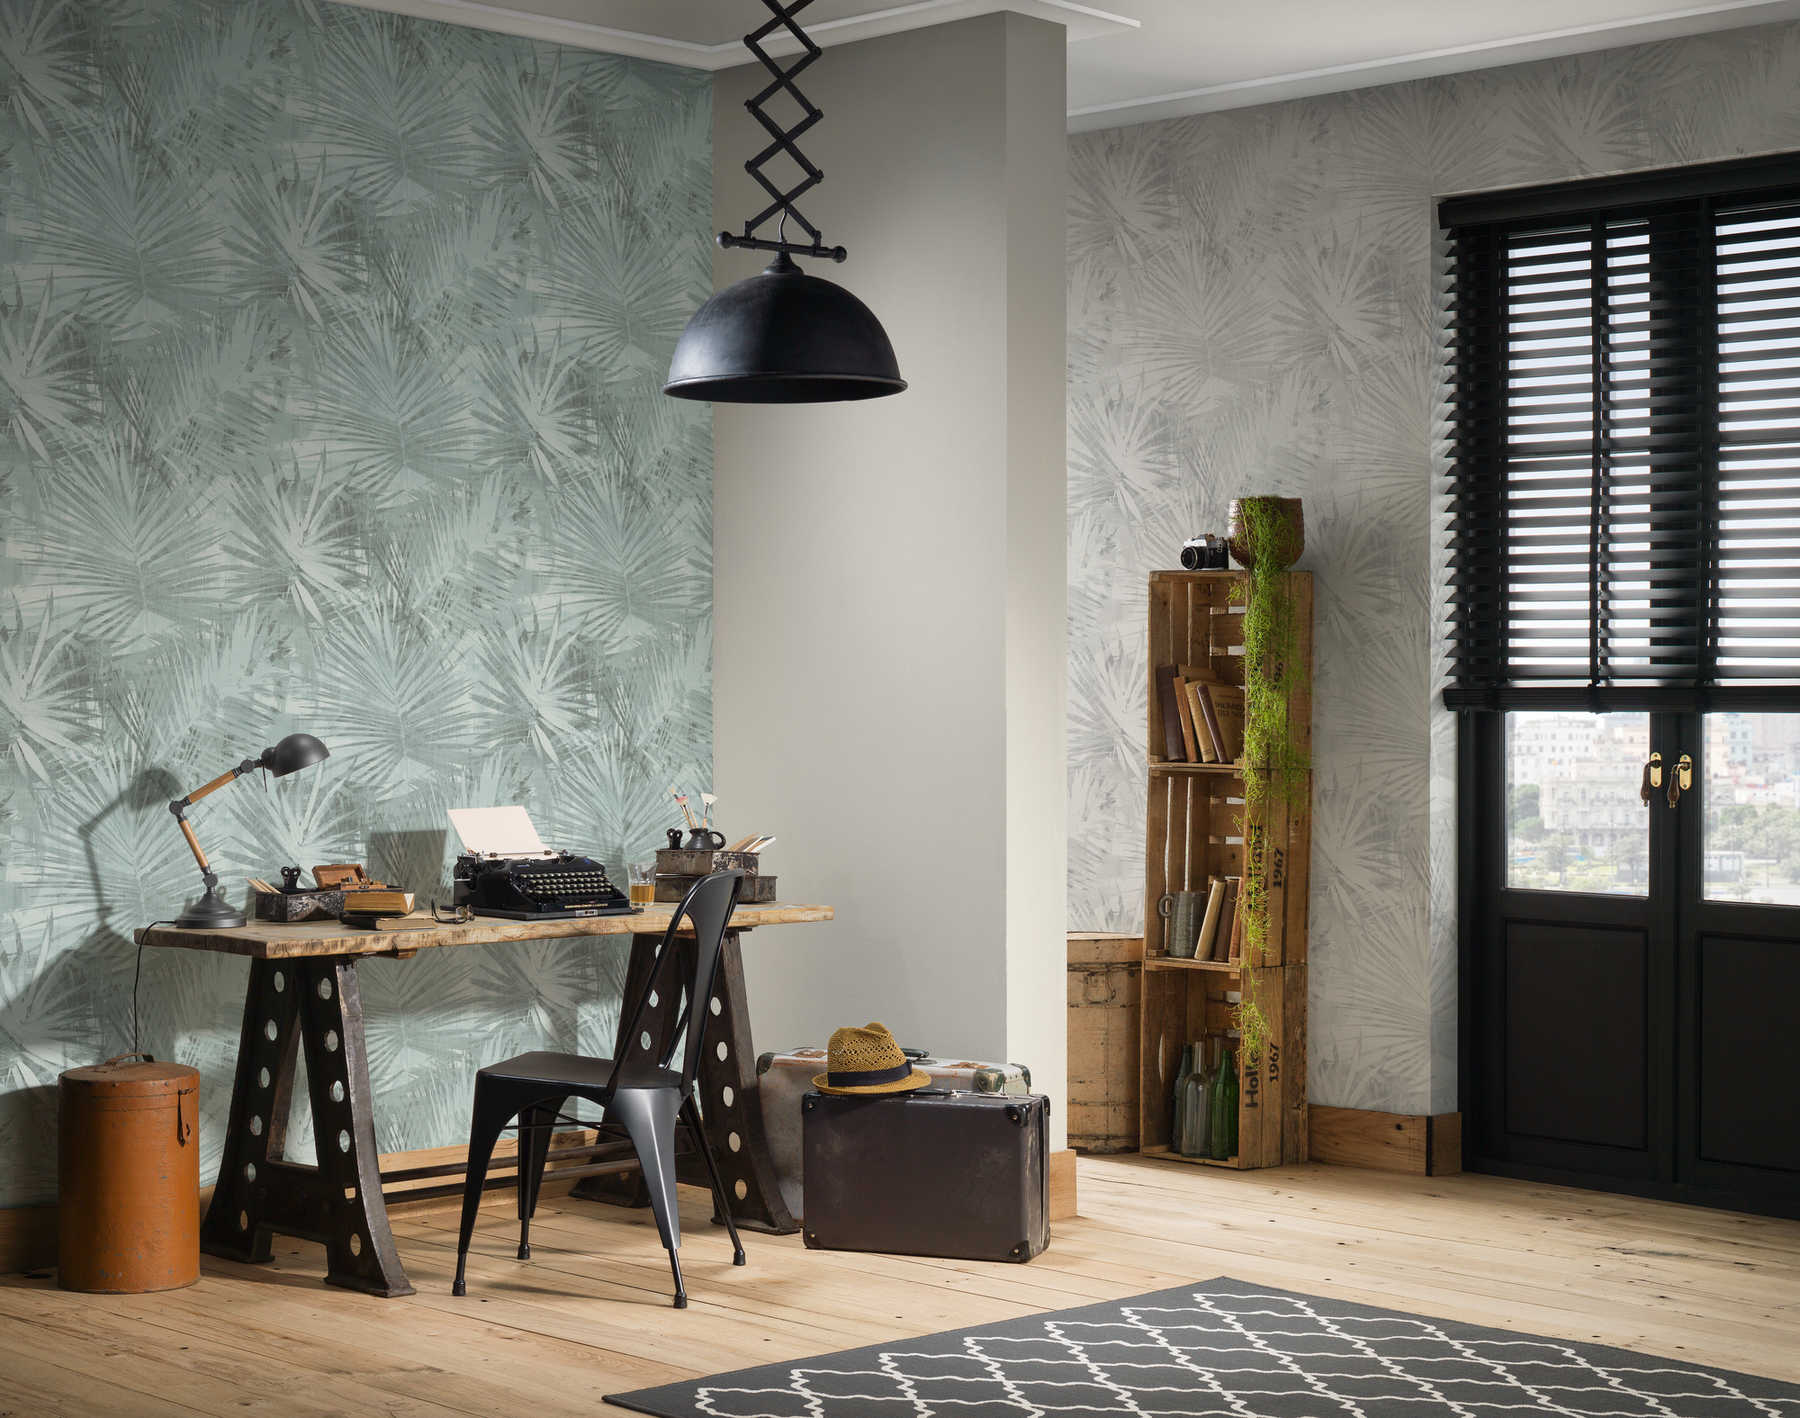             Leaves wallpaper stylized design in hygge look - grey
        